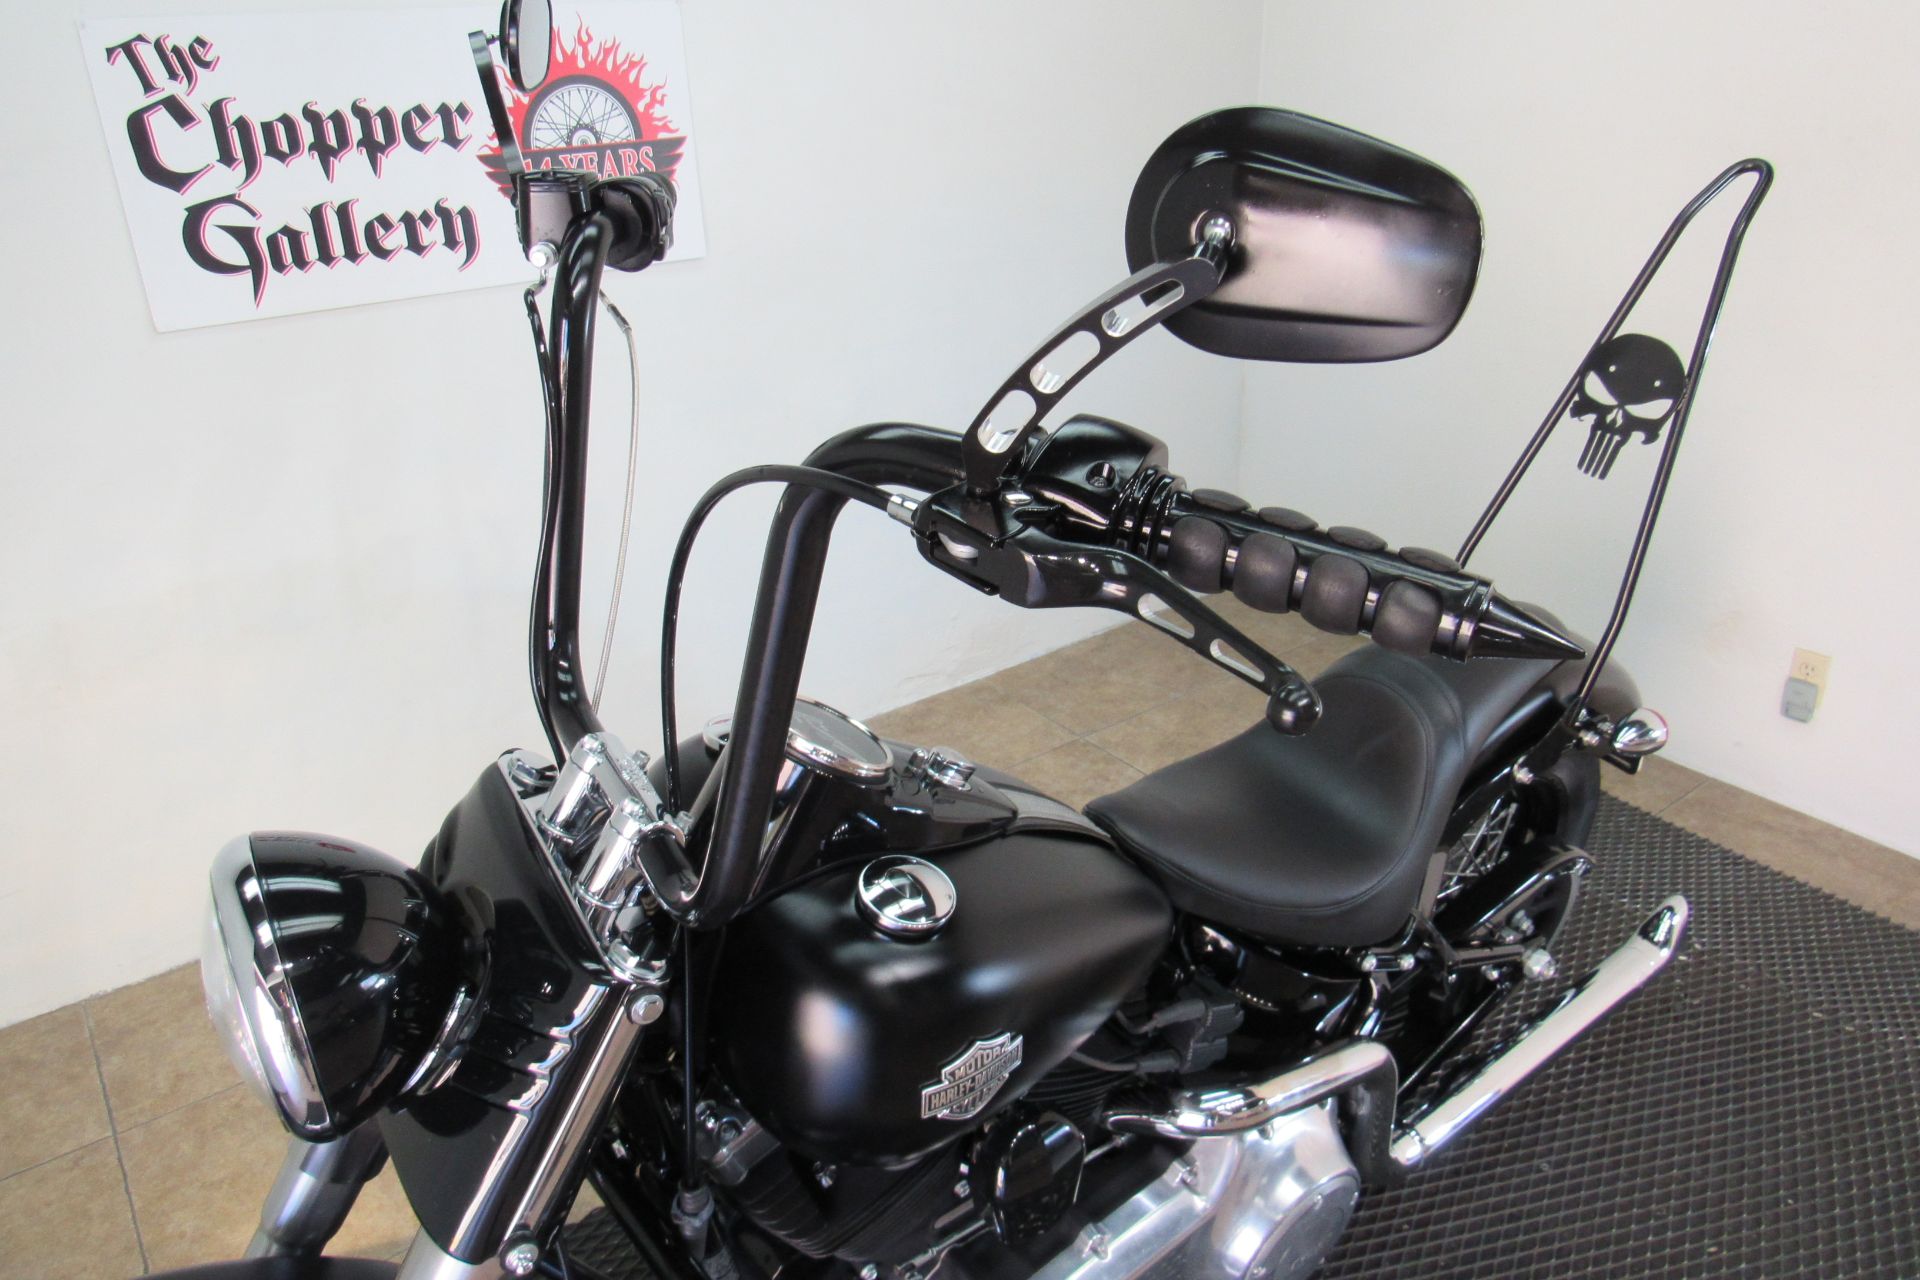 2013 Harley-Davidson Softail Slim® in Temecula, California - Photo 24